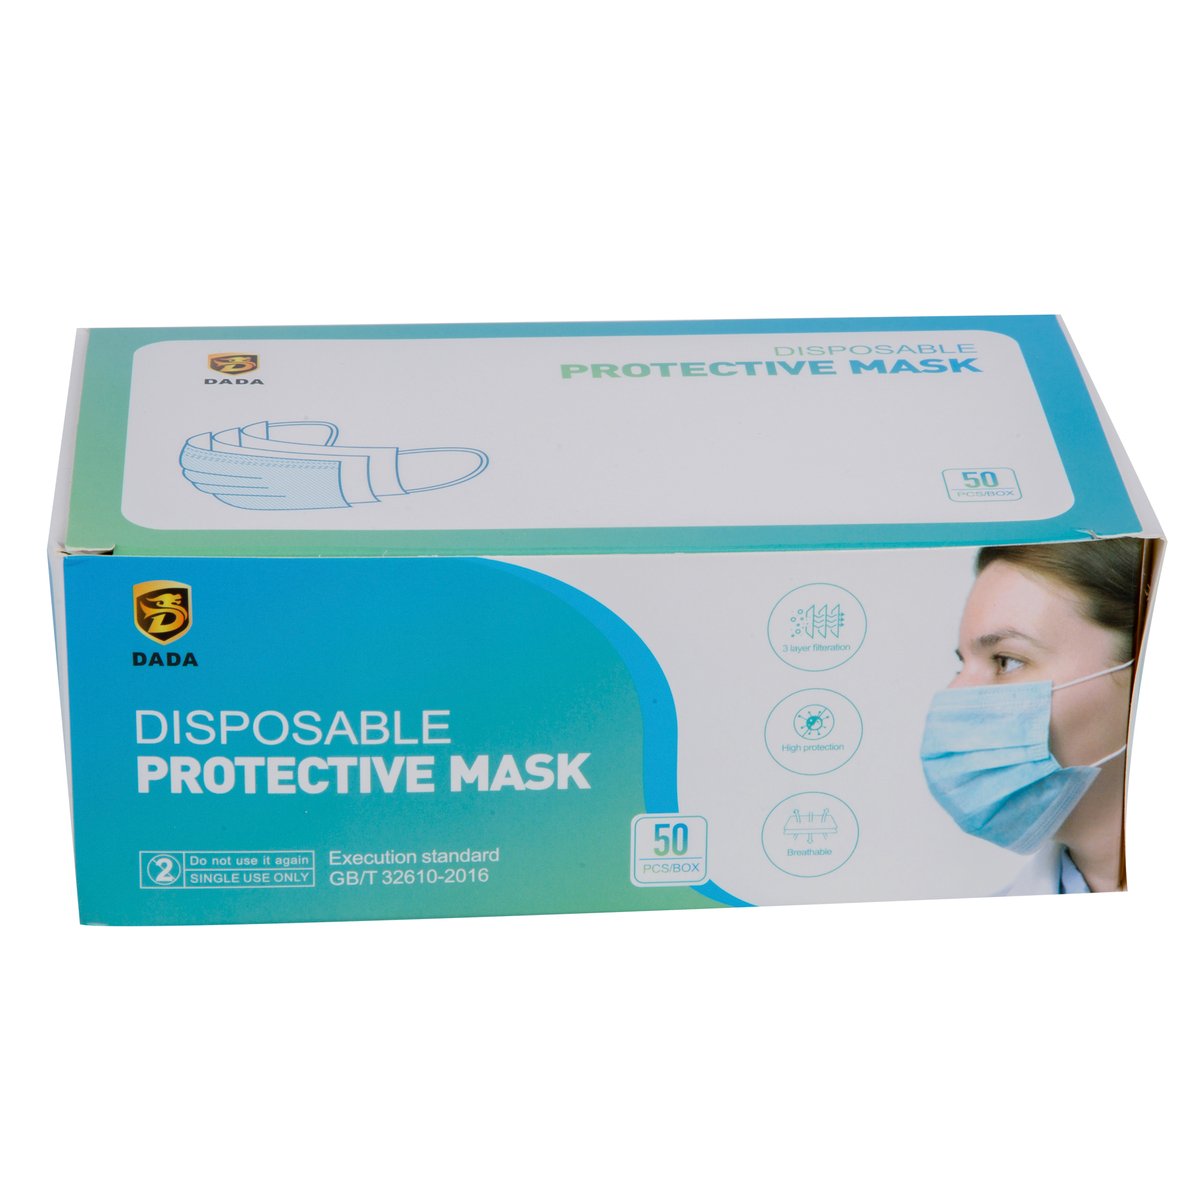 Dada Disposable Protective Mask 3ply 50pcs